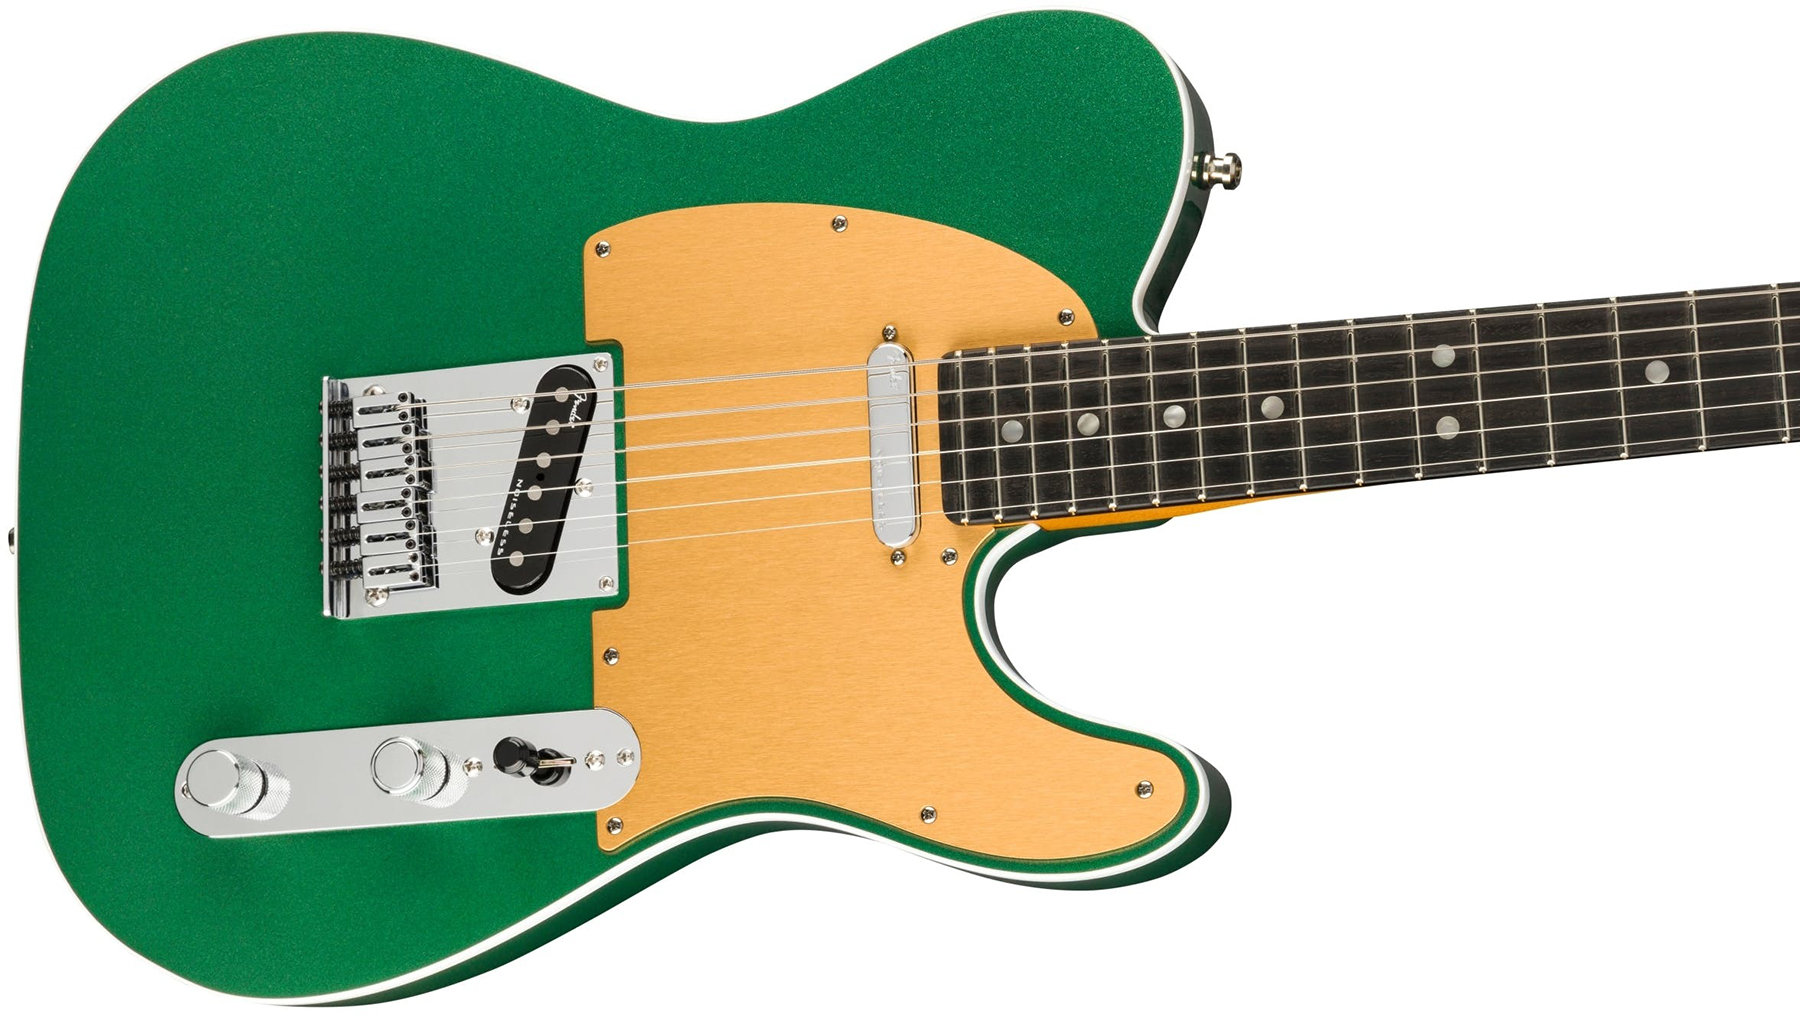 Fender Tele American Ultra Fsr Ltd Usa 2s Ht Eb - Mystic Pine Green - Guitarra eléctrica con forma de tel - Variation 2